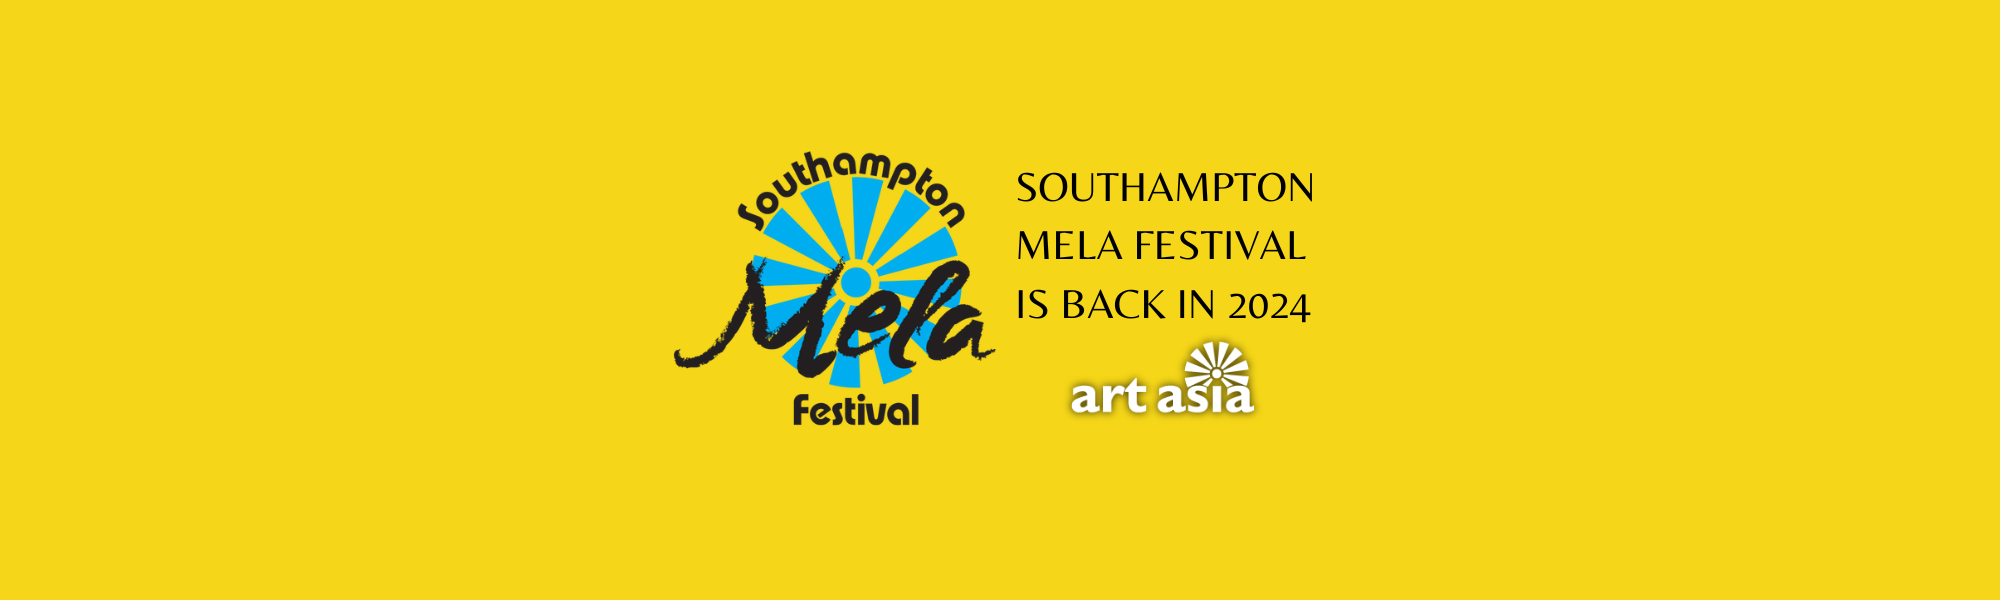 Southampton Mela Festival announced for 2024! Art Asia